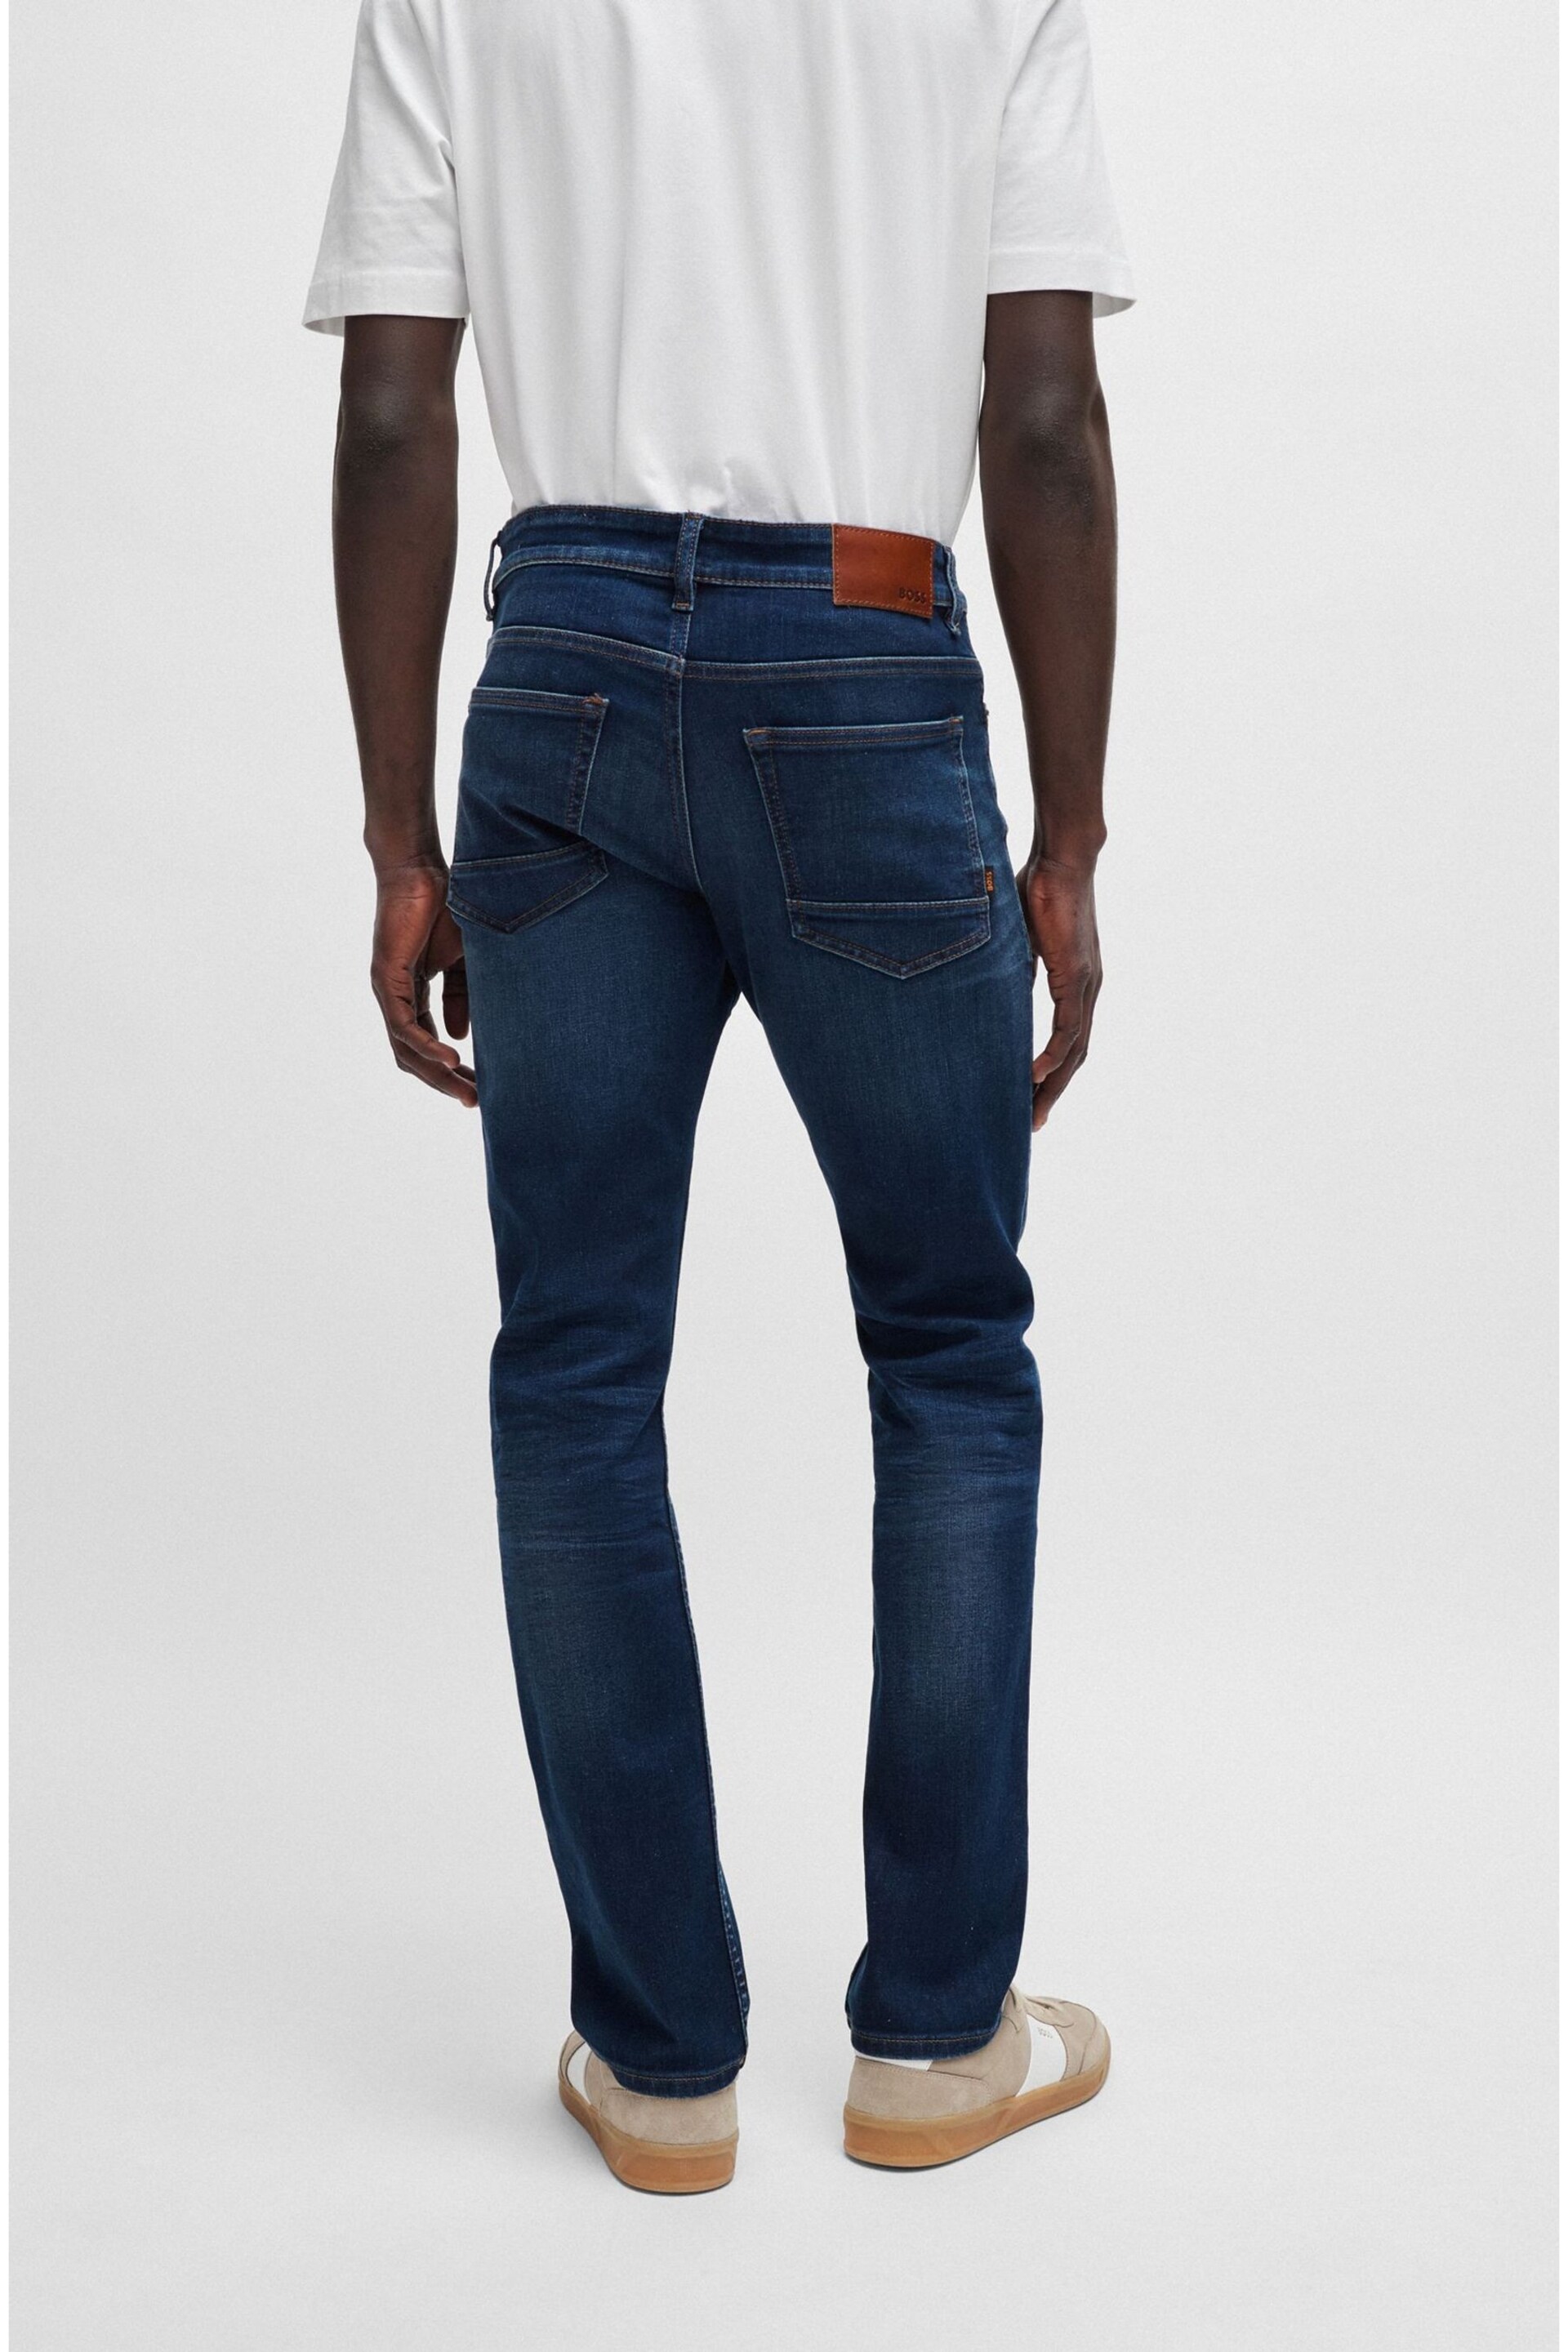 BOSS Dark Blue Tapered Fit Super Stretch Denim Jeans - Image 4 of 5